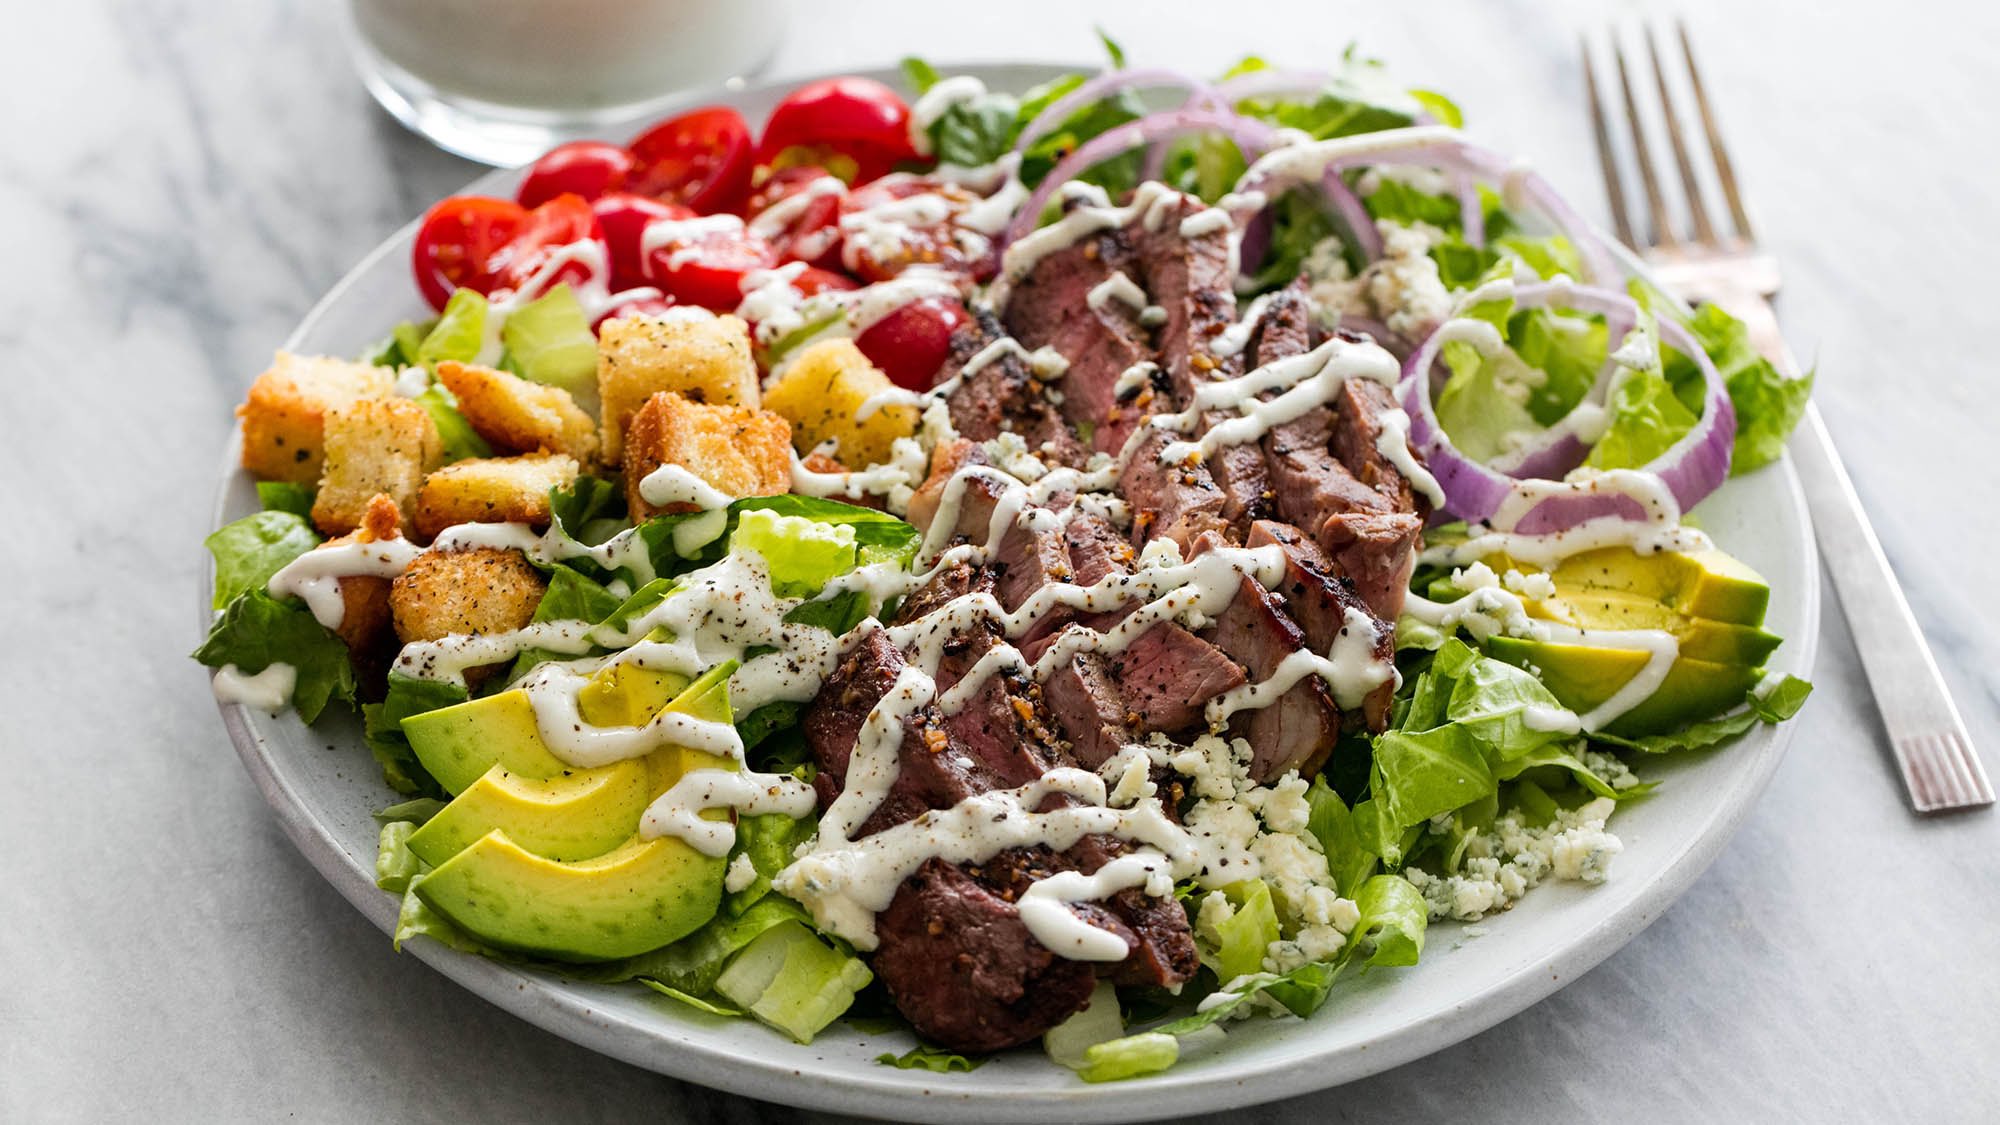 Steak salad with avocado